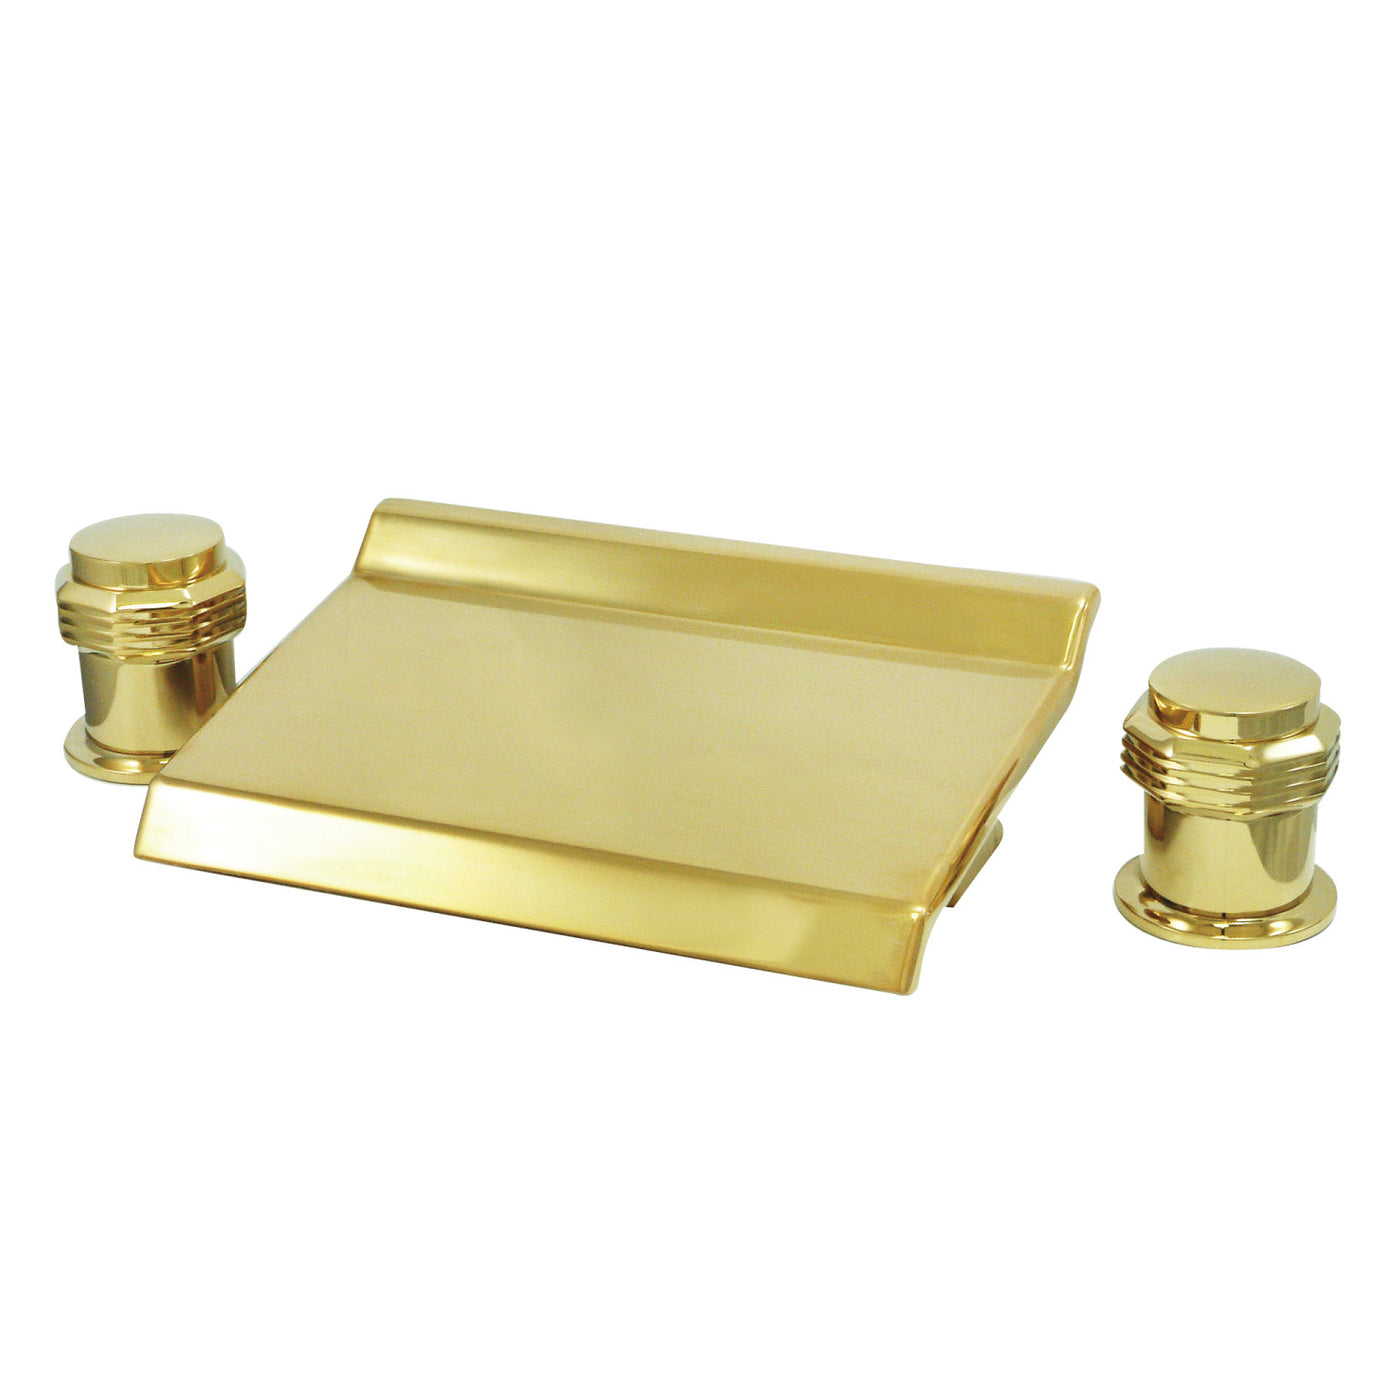 Elements of Design ES2242MR Roman Tub Faucet, Polished Brass